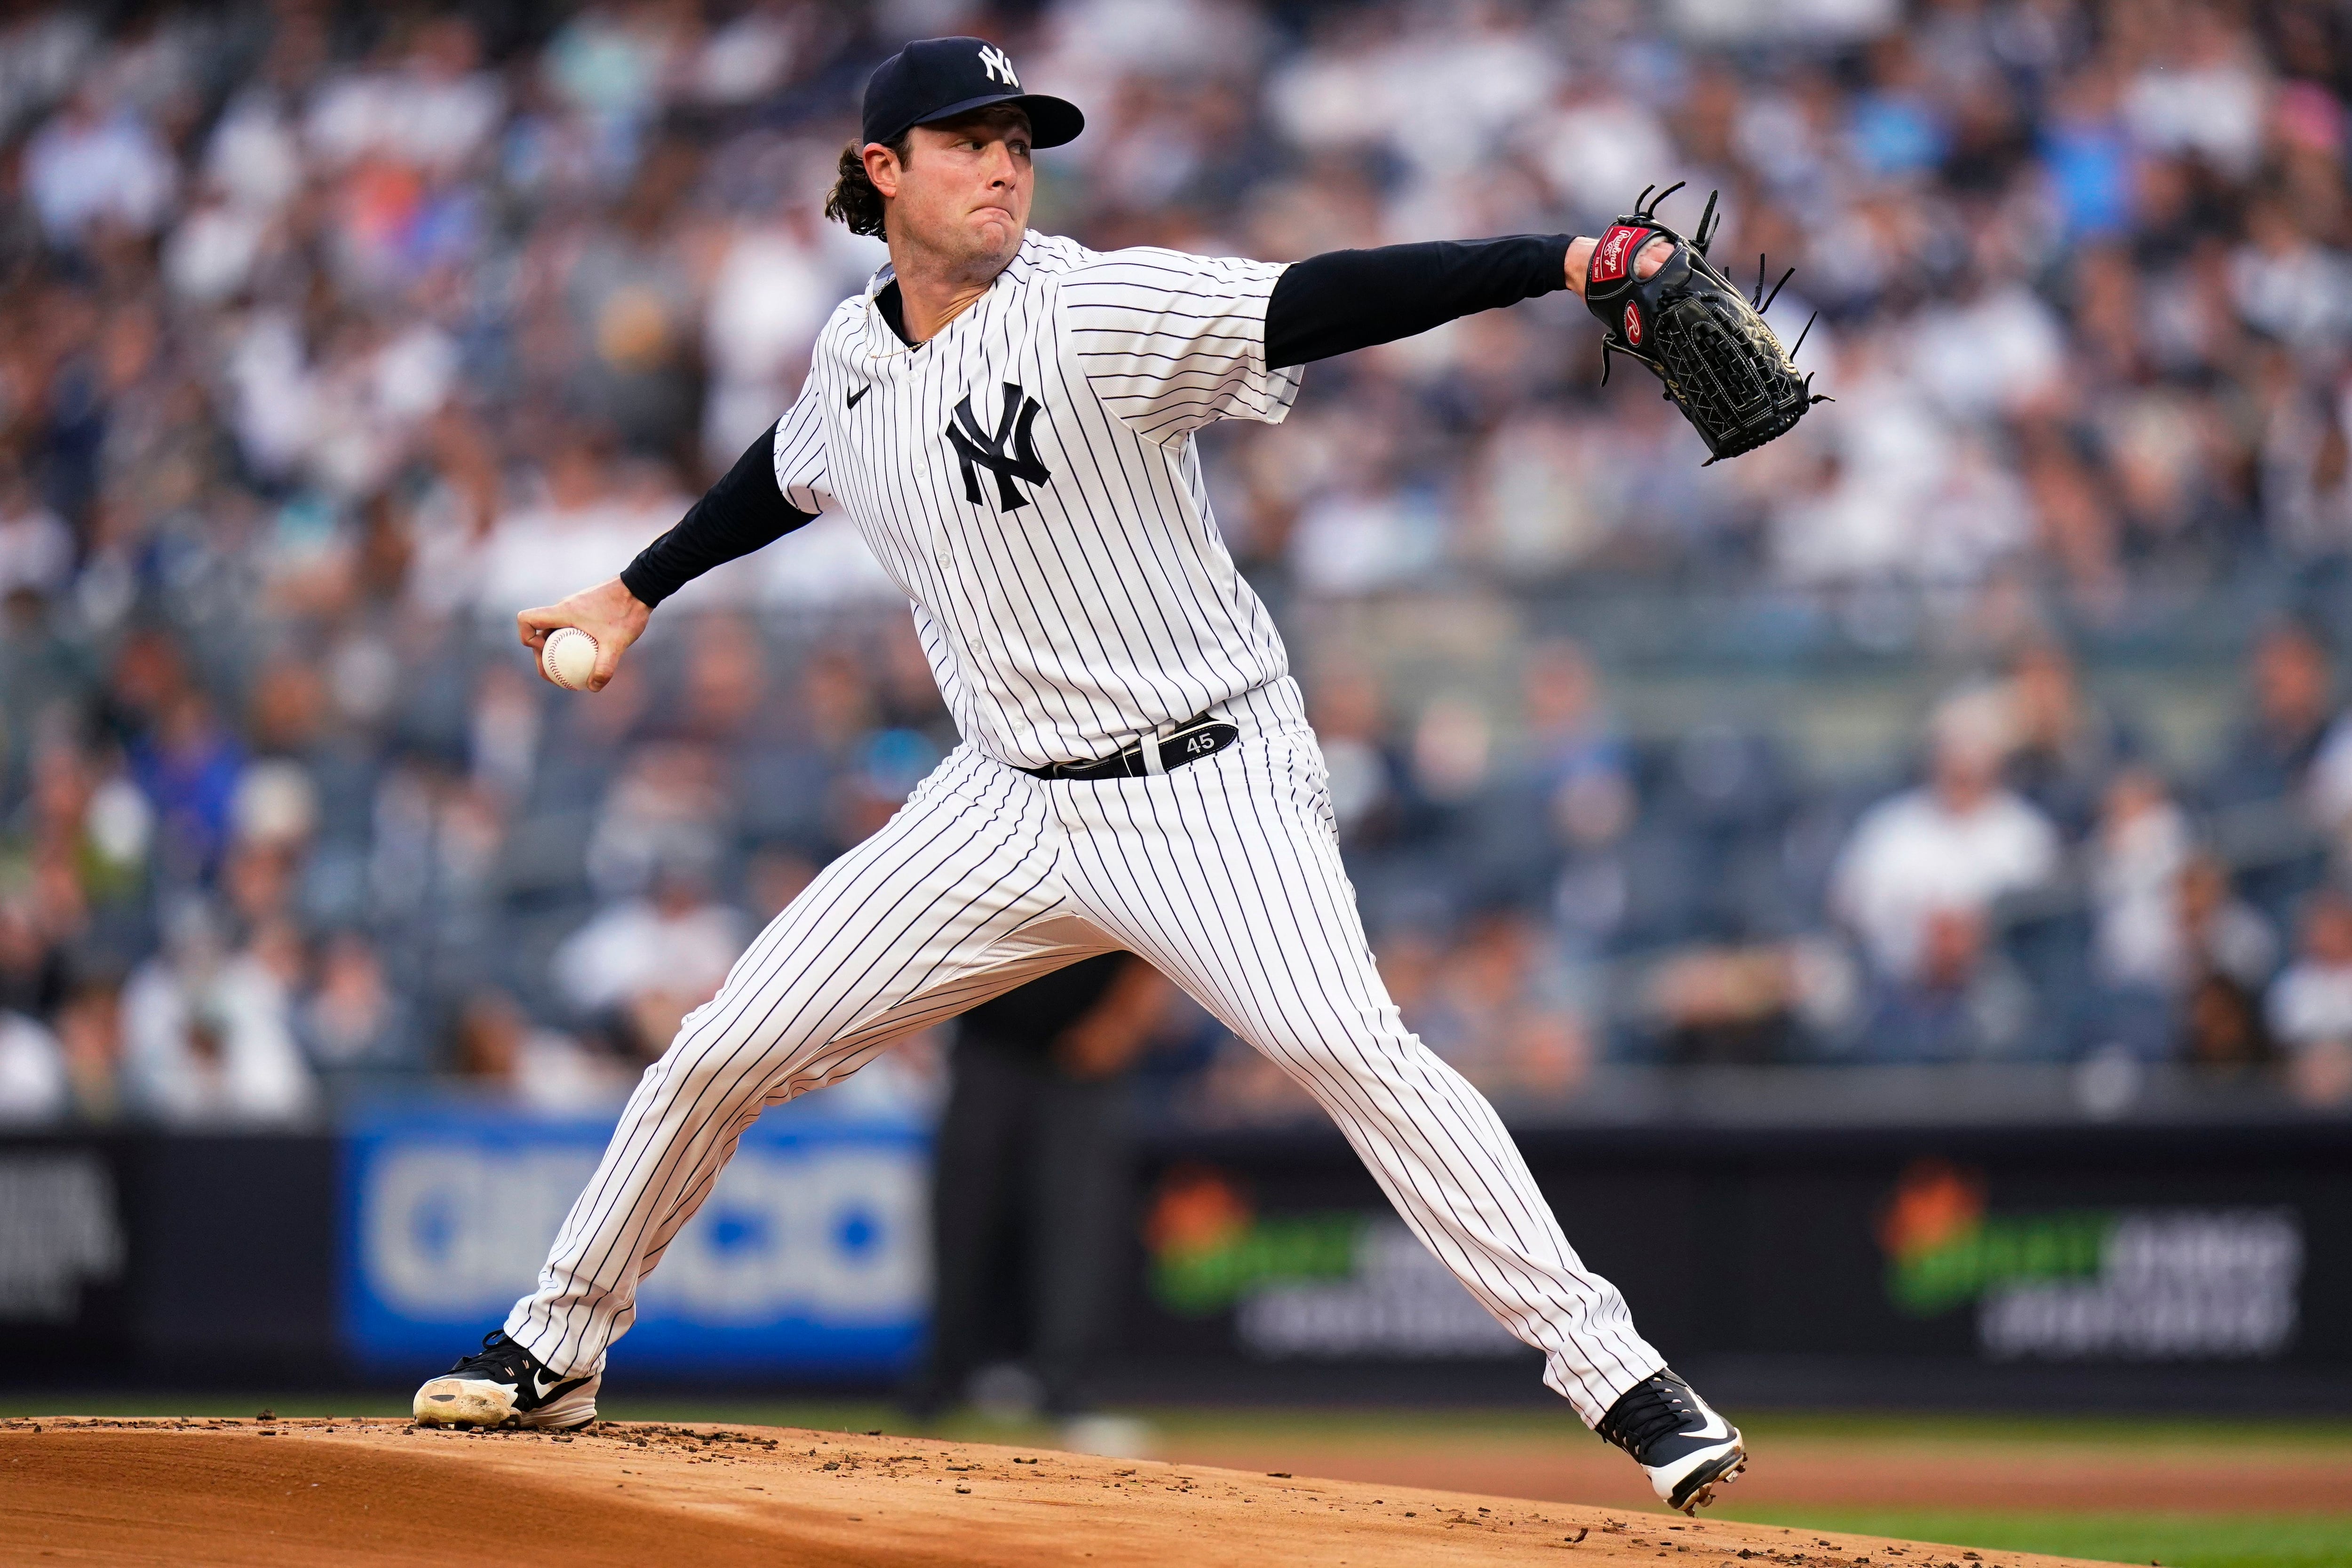 Yankees catcher Jose Trevino to undergo season-ending wrist surgery, National Sports